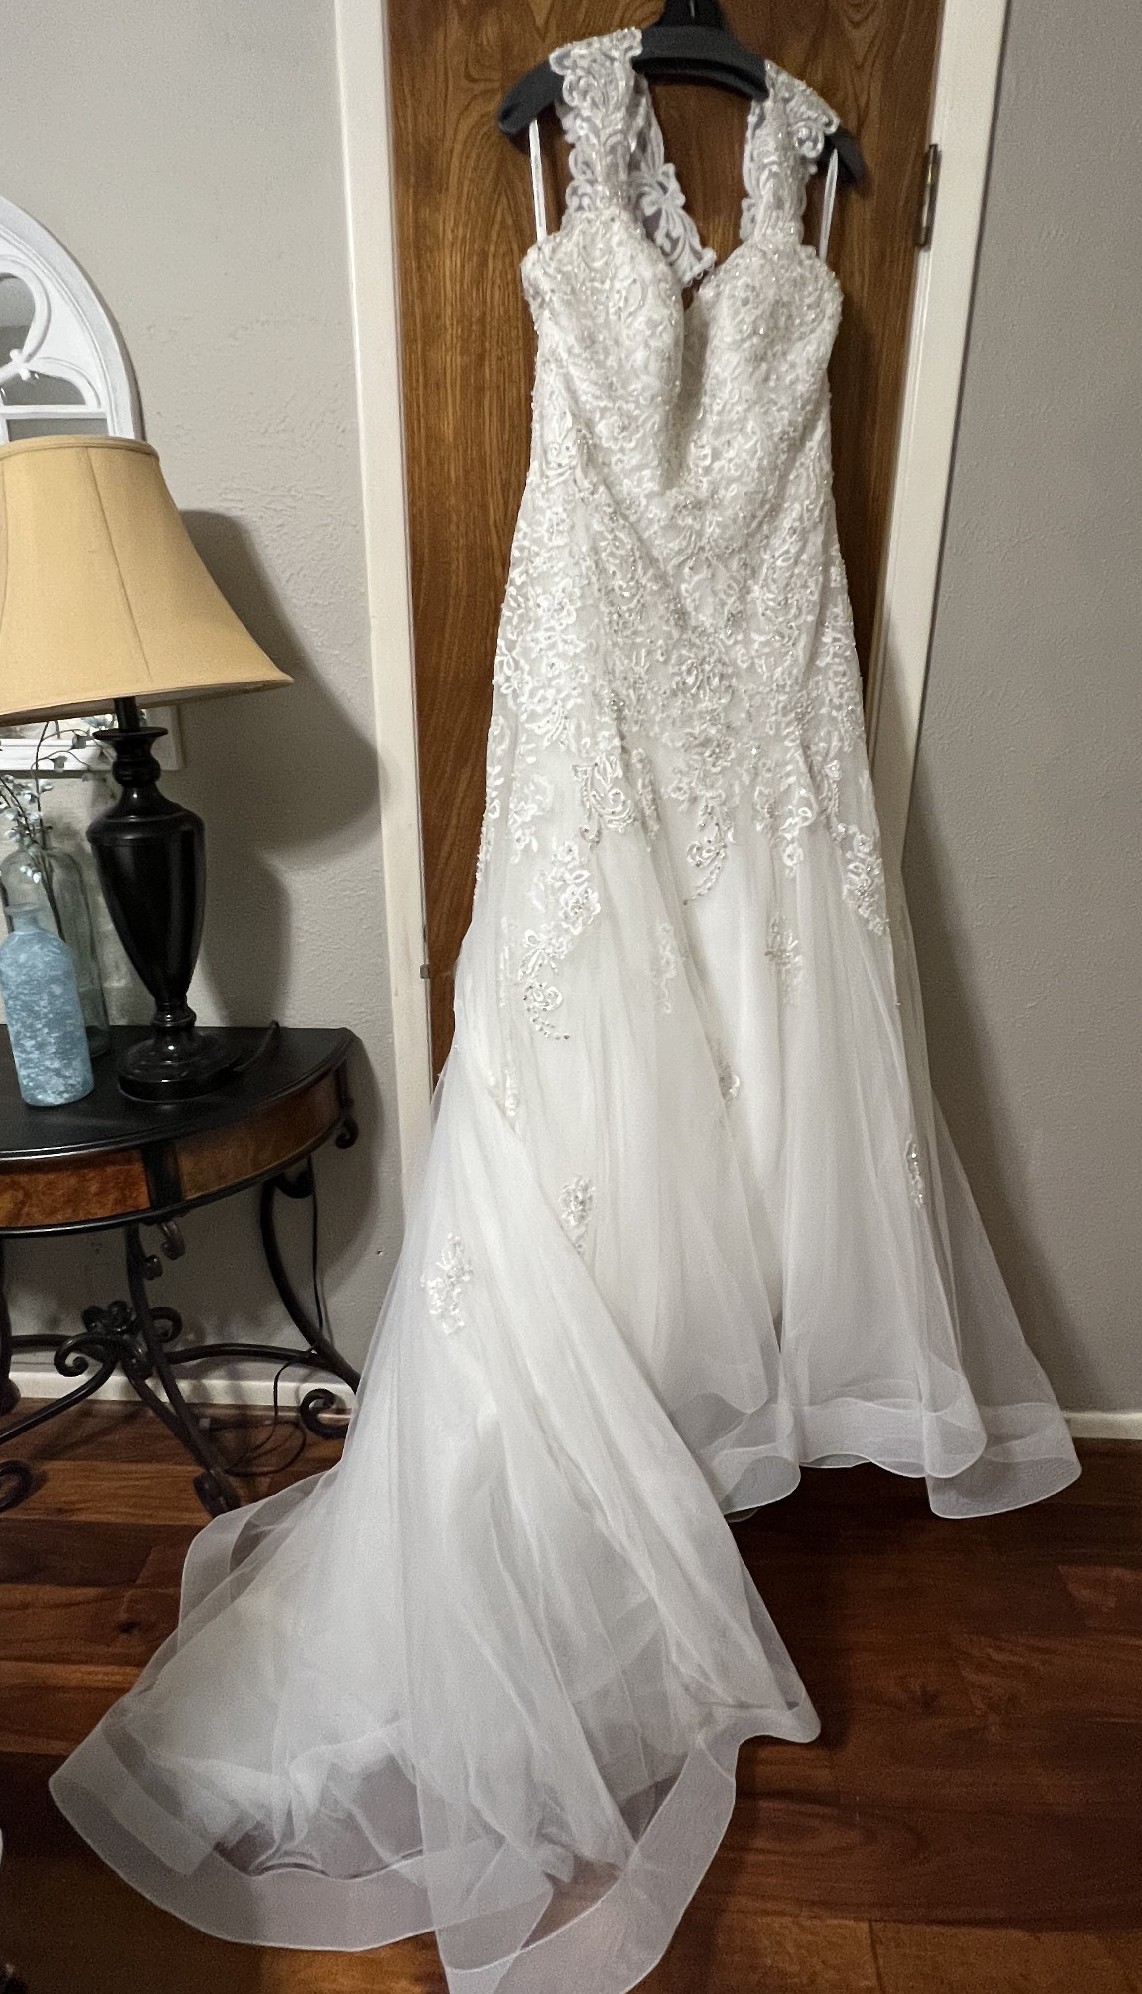 Morilee Monique New Wedding Dress Save 79% - Stillwhite